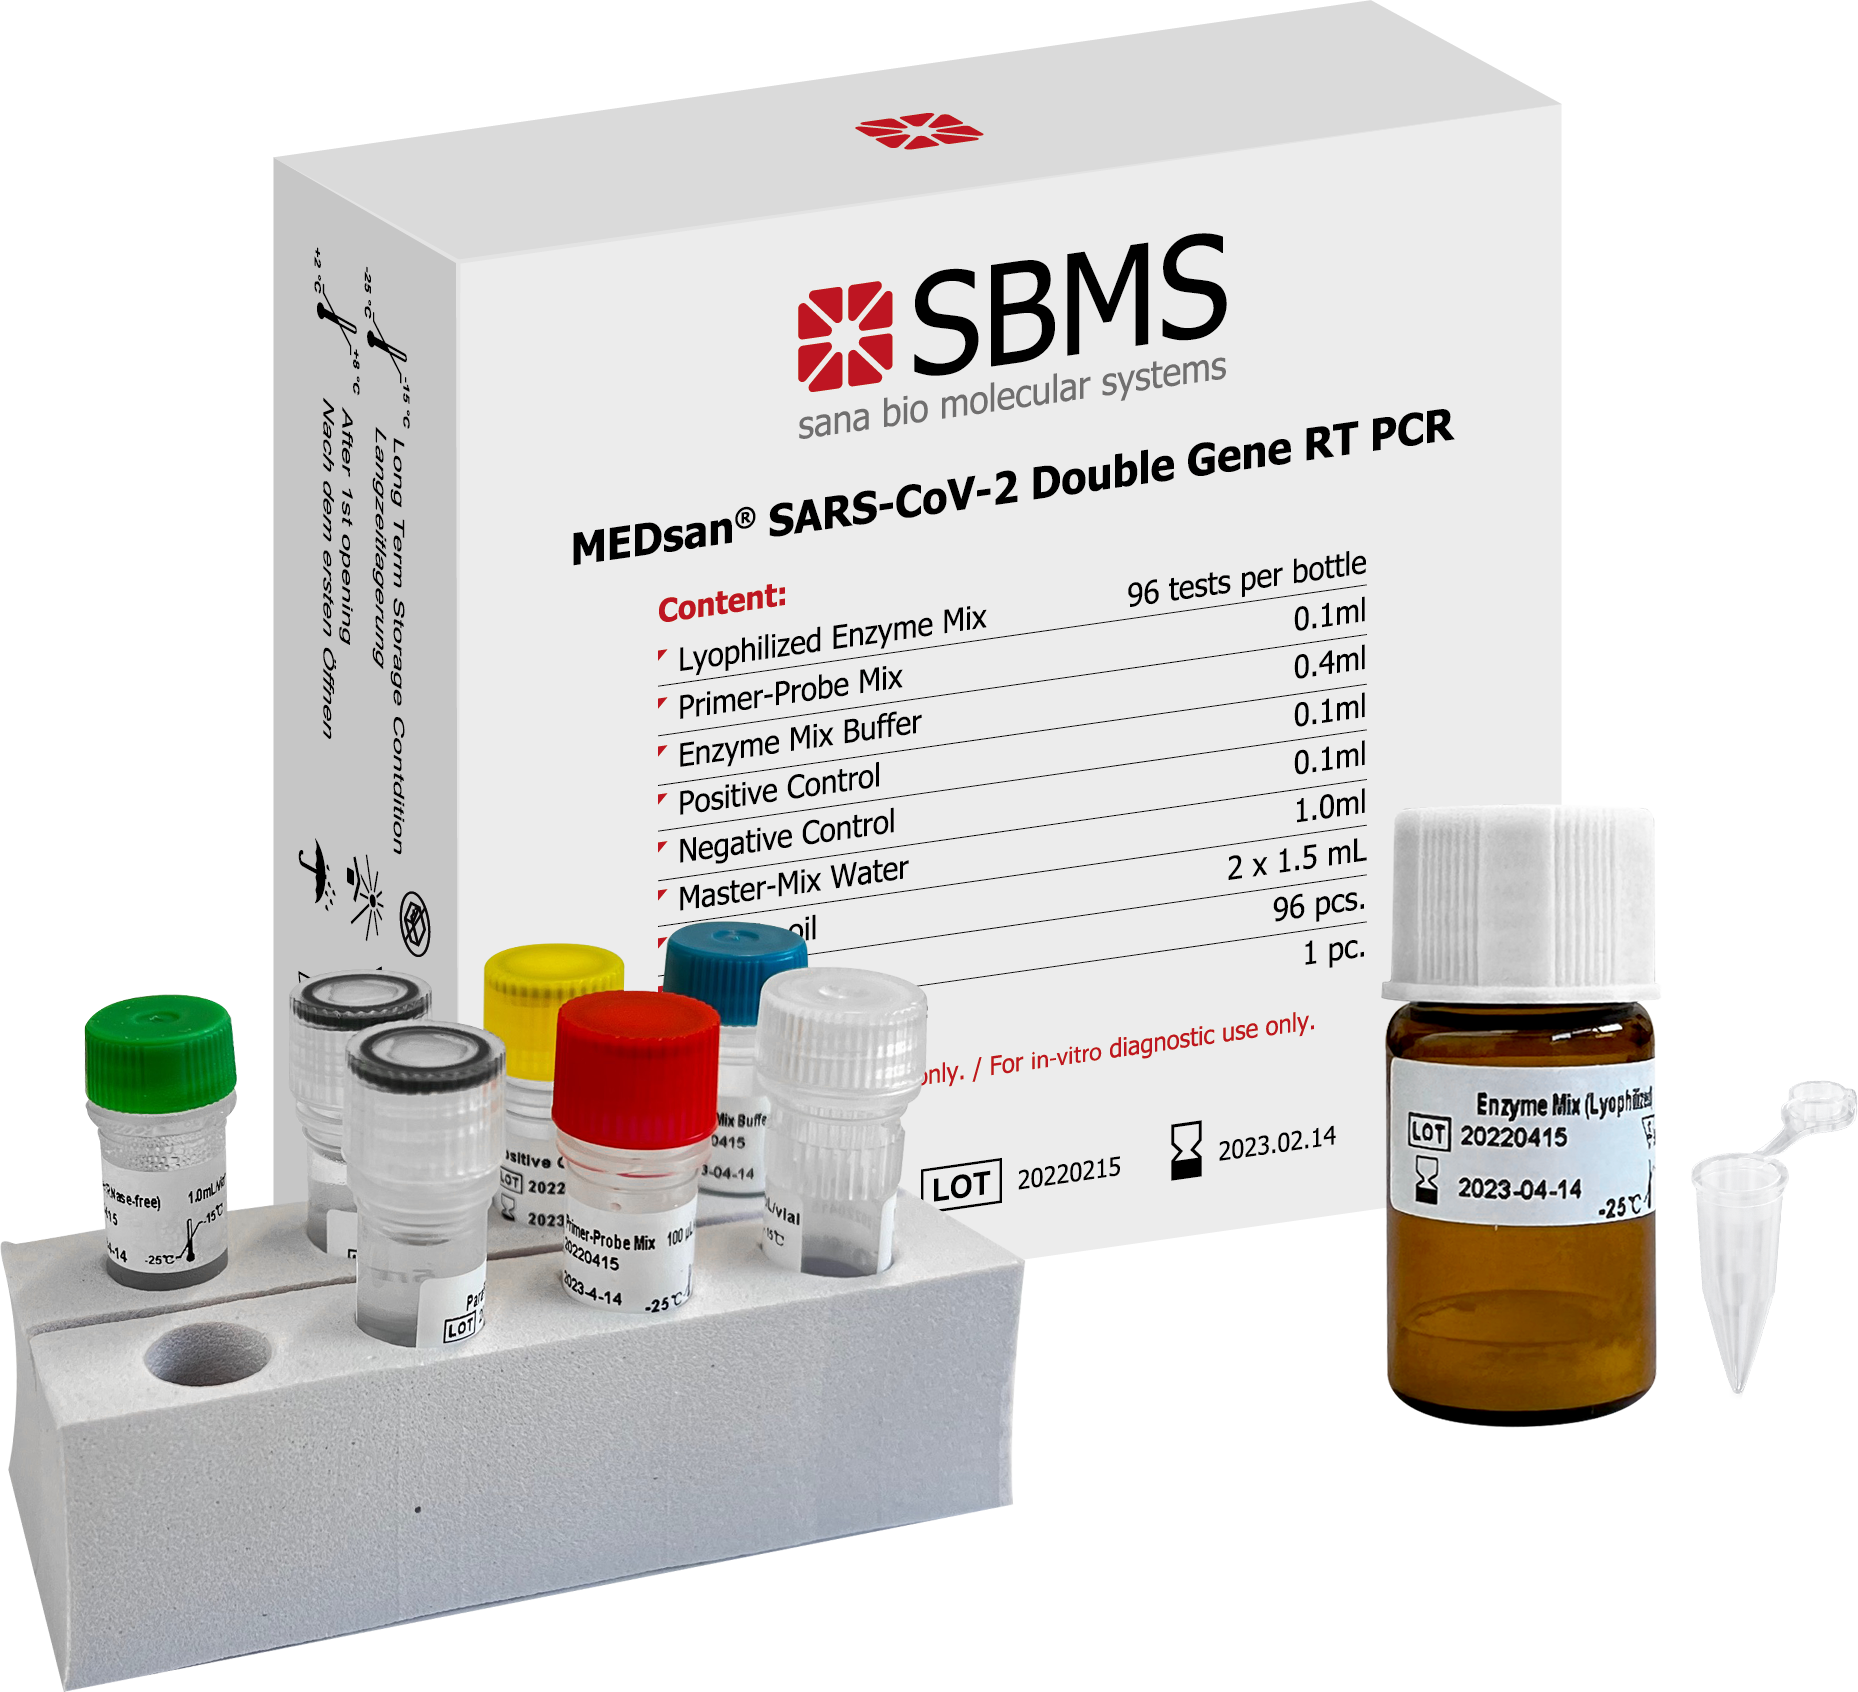 MEDsan® SARS-CoV-2 Double Gene RT PCR